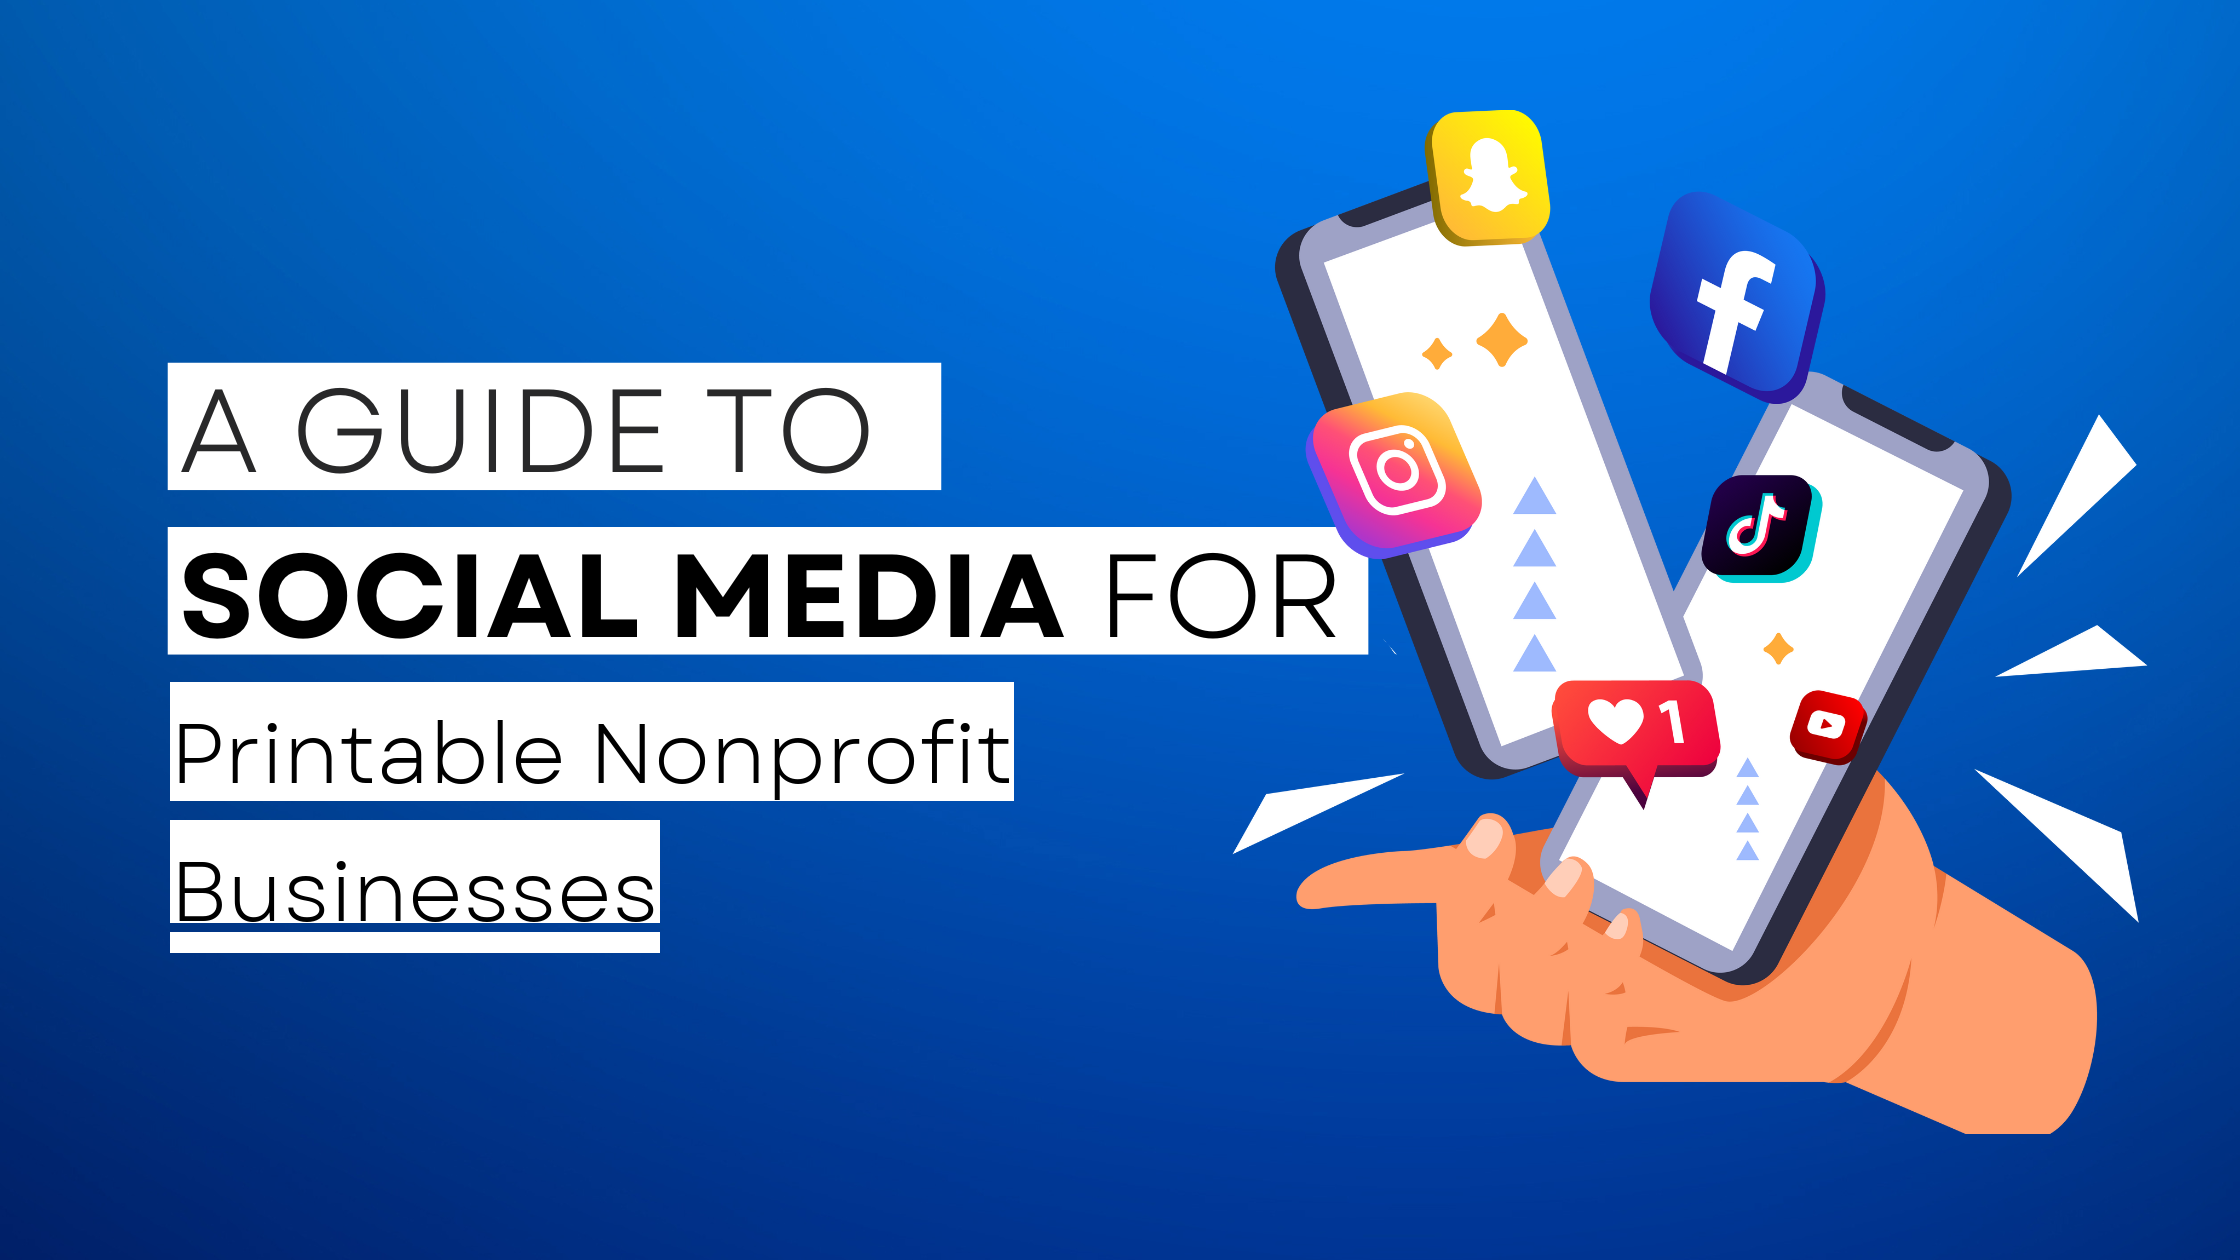 How to start Printable Nonprofit on social media